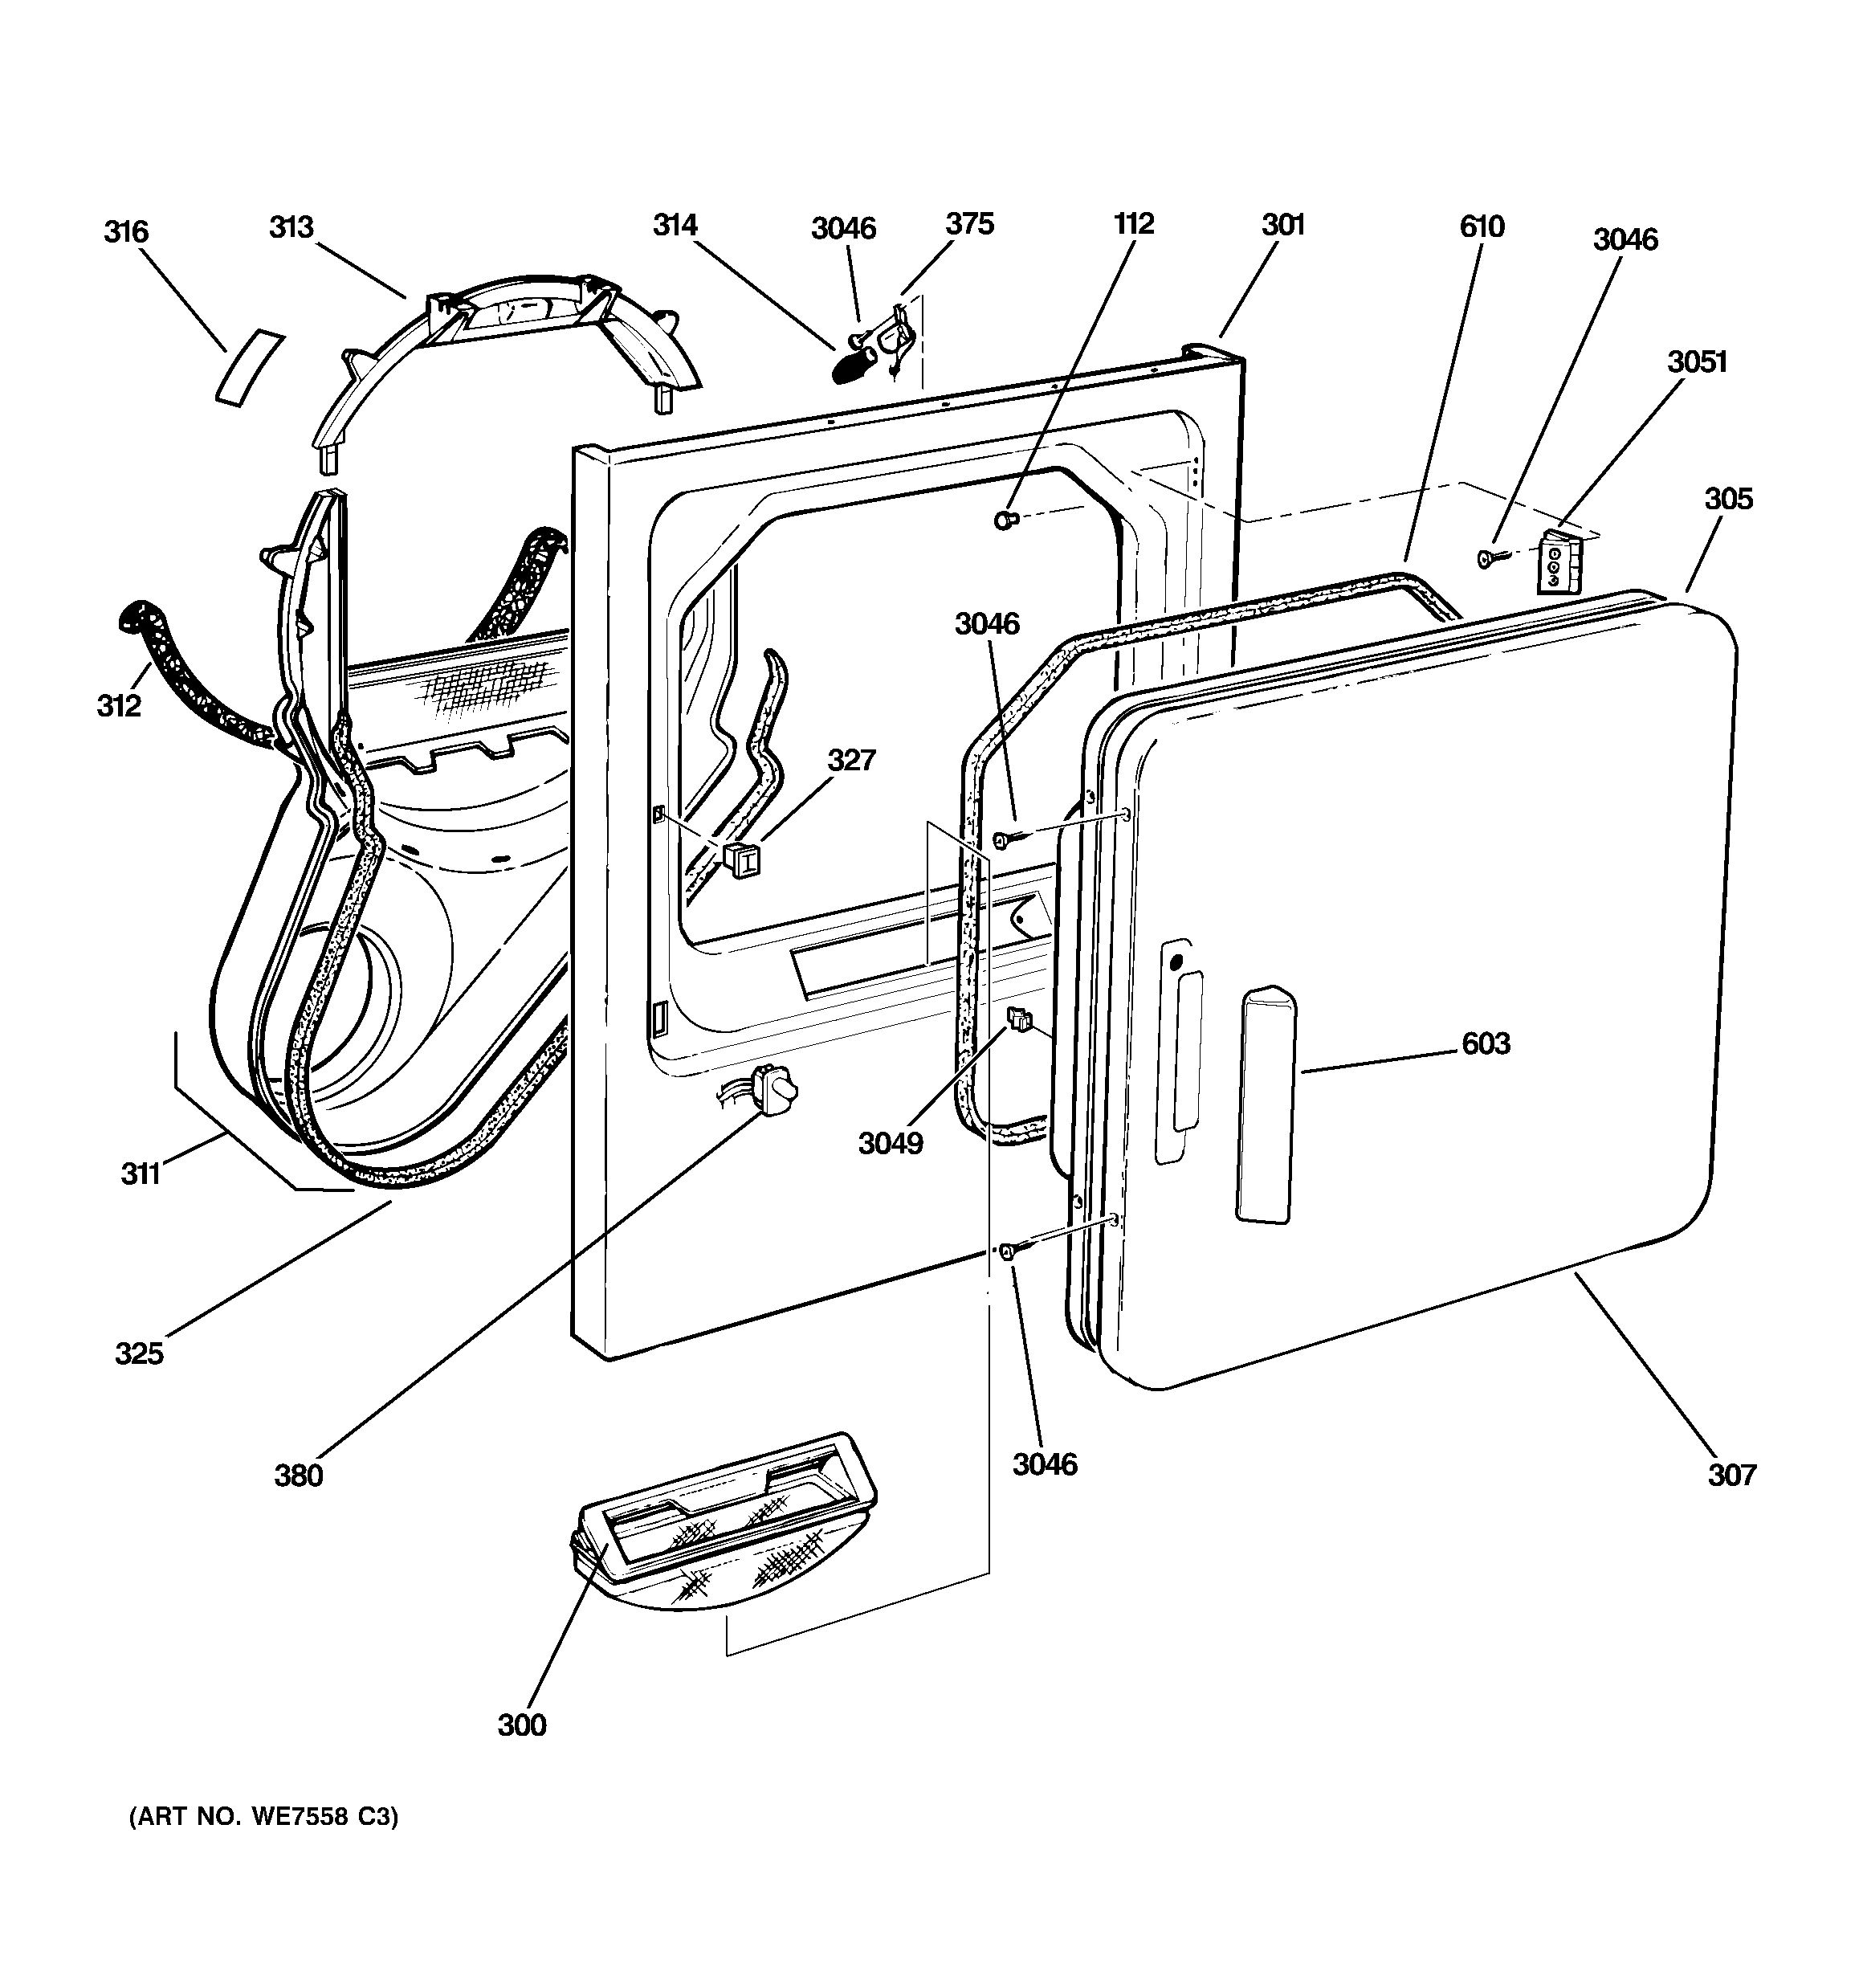 Ge Profile Dryer Parts Diagram